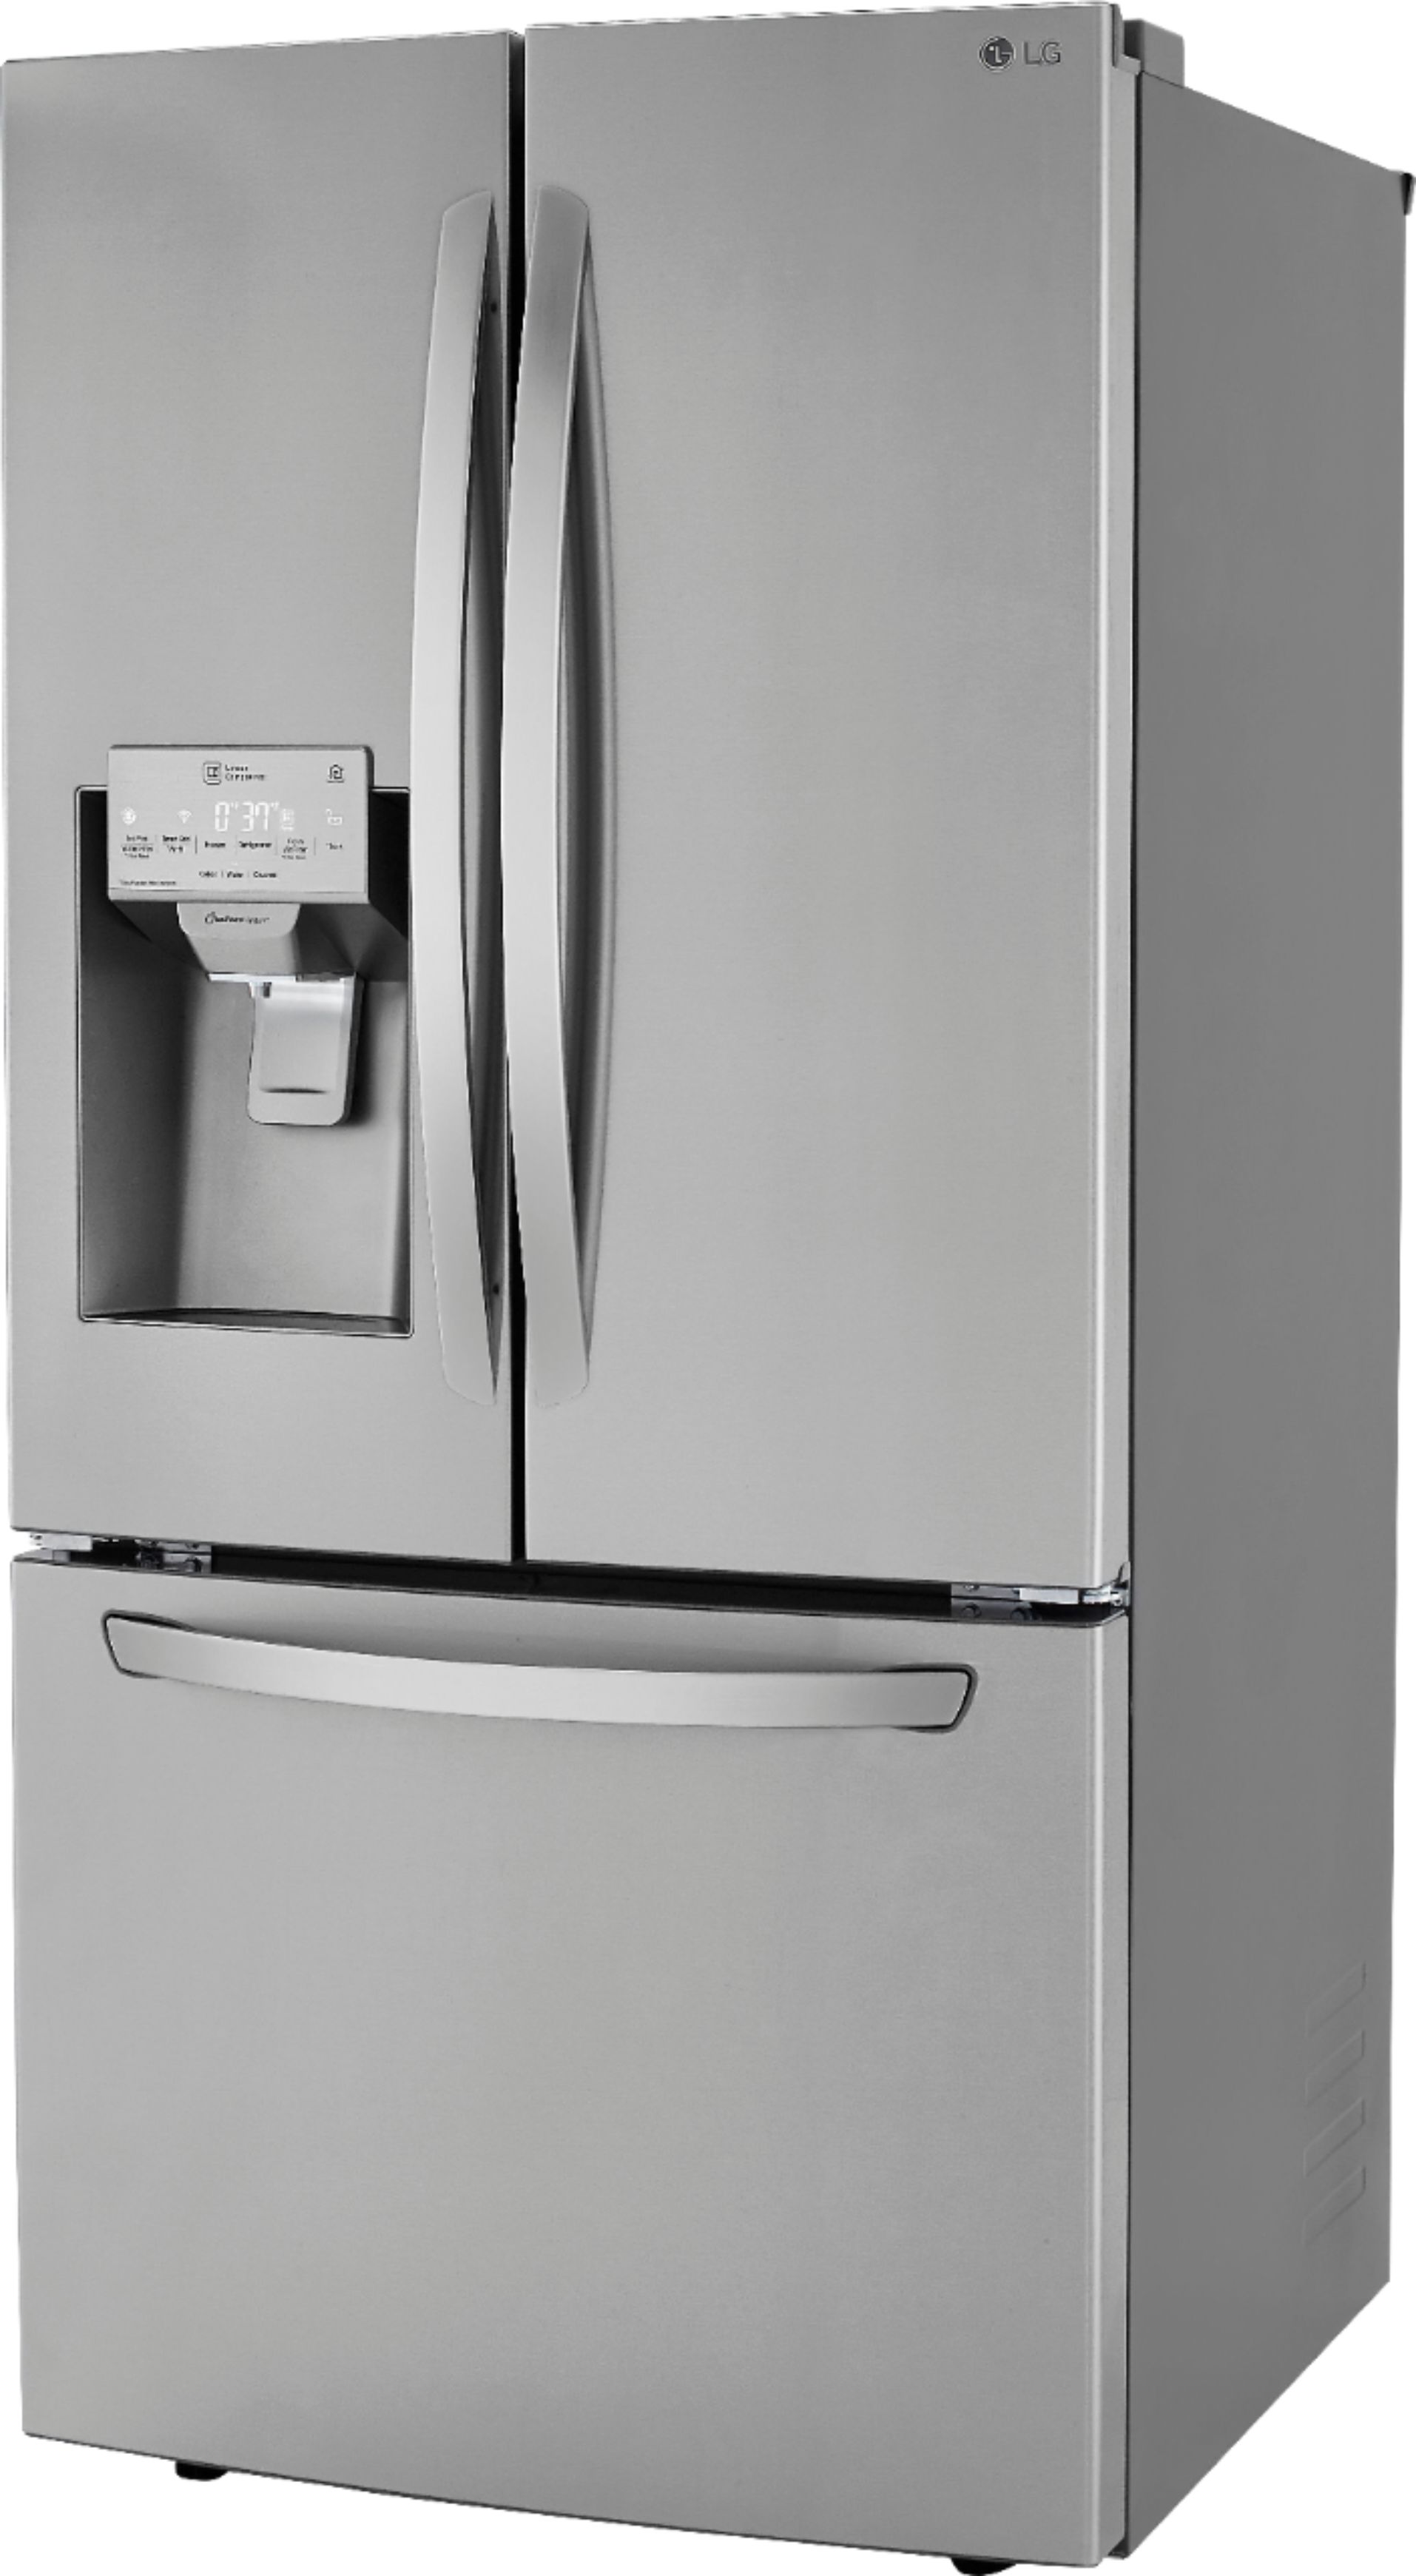 LG LRFXS2503S 24.5 cu. ft. Smart Wi-Fi Enabled French Door Refrigerator  (33 Width) - PrintProof™ Stainless Steel